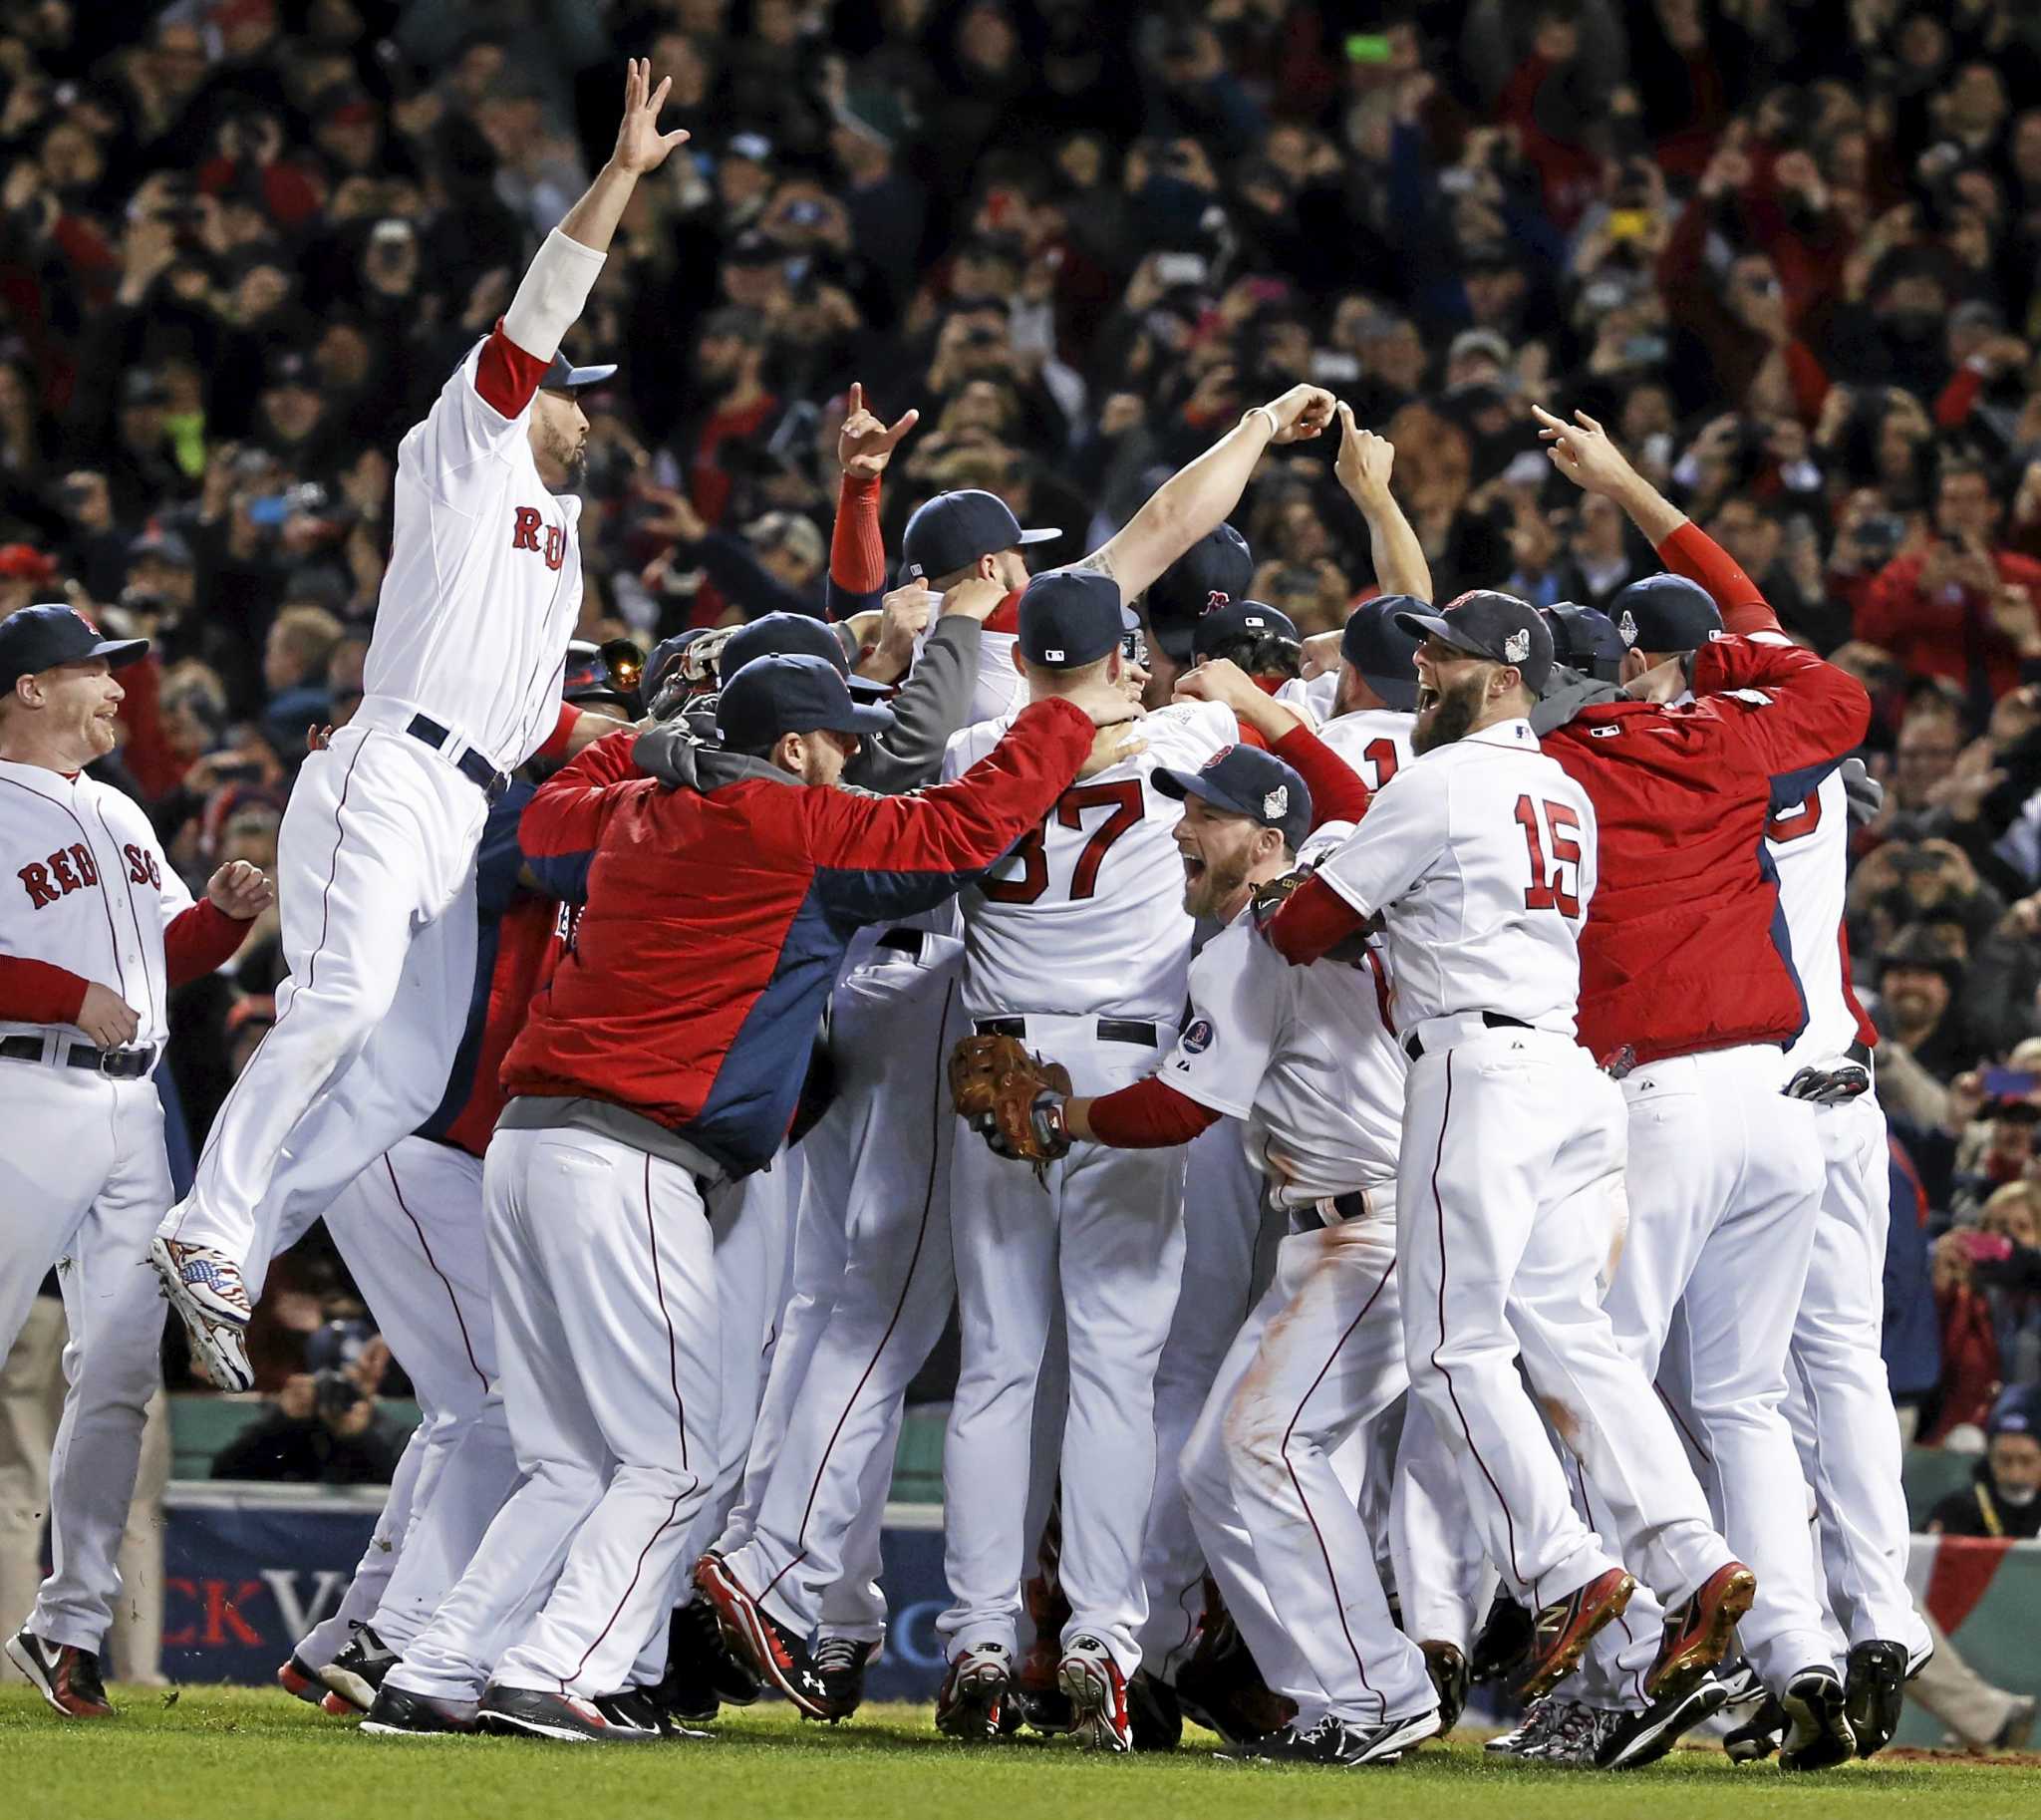 Red Sox to mark 10-year anniversary of Boston Marathon Bombing